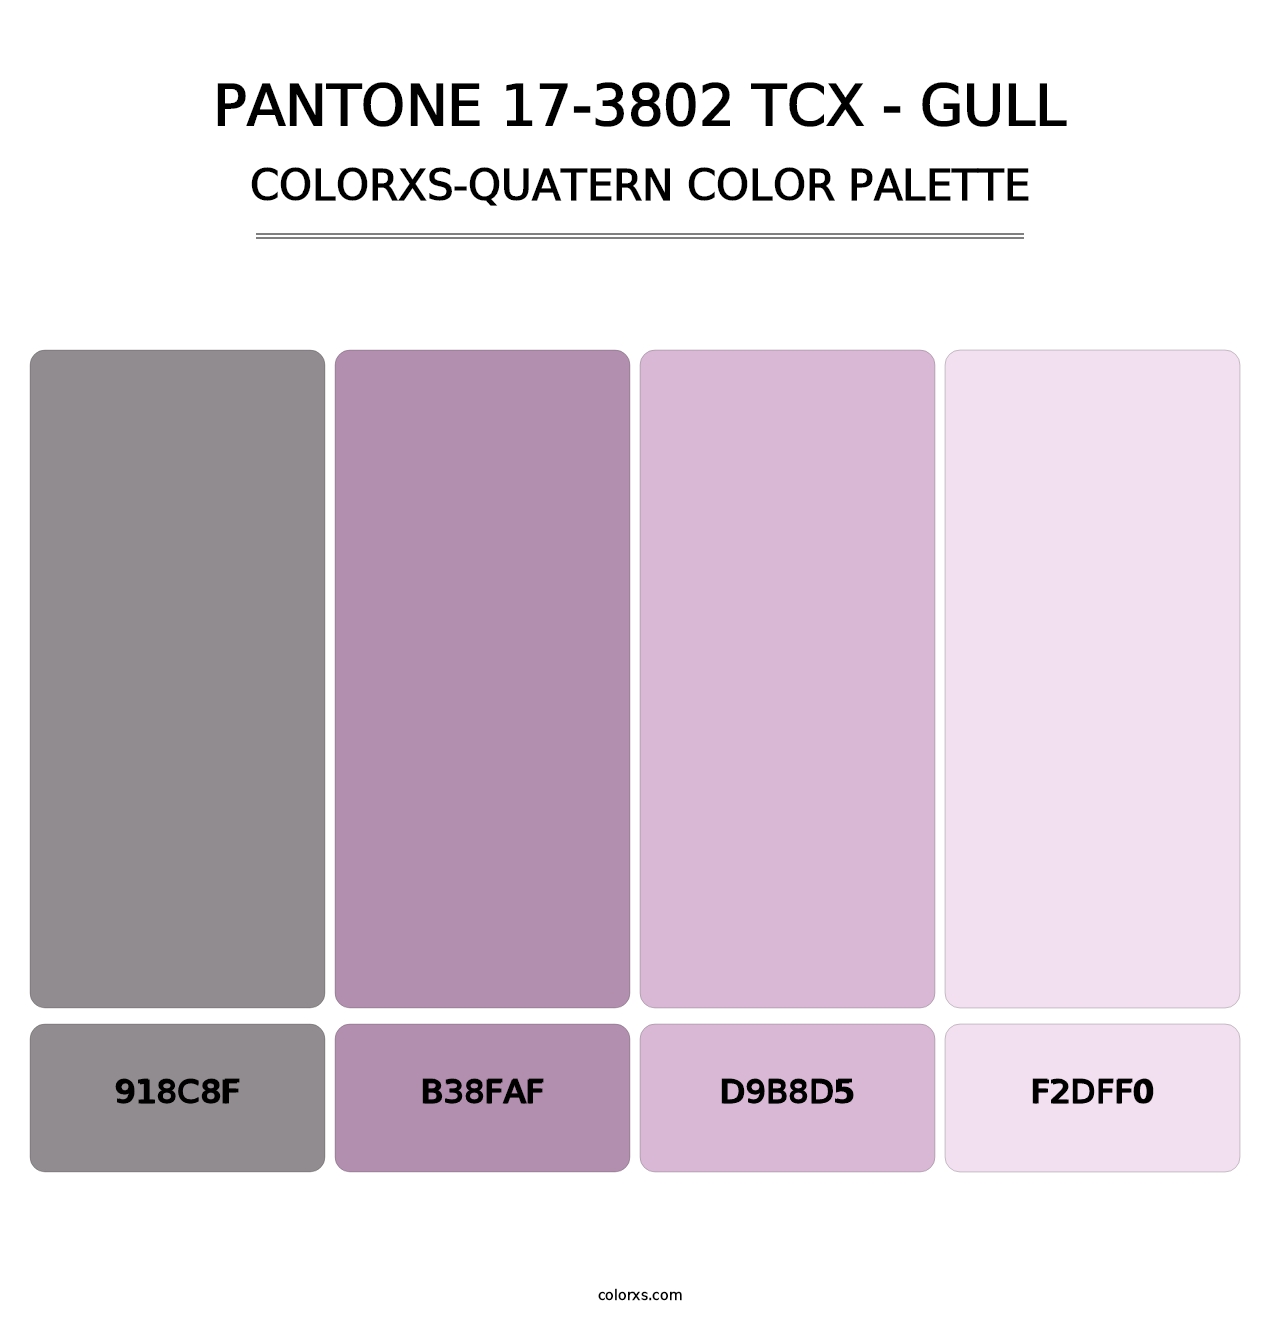 PANTONE 17-3802 TCX - Gull - Colorxs Quatern Palette